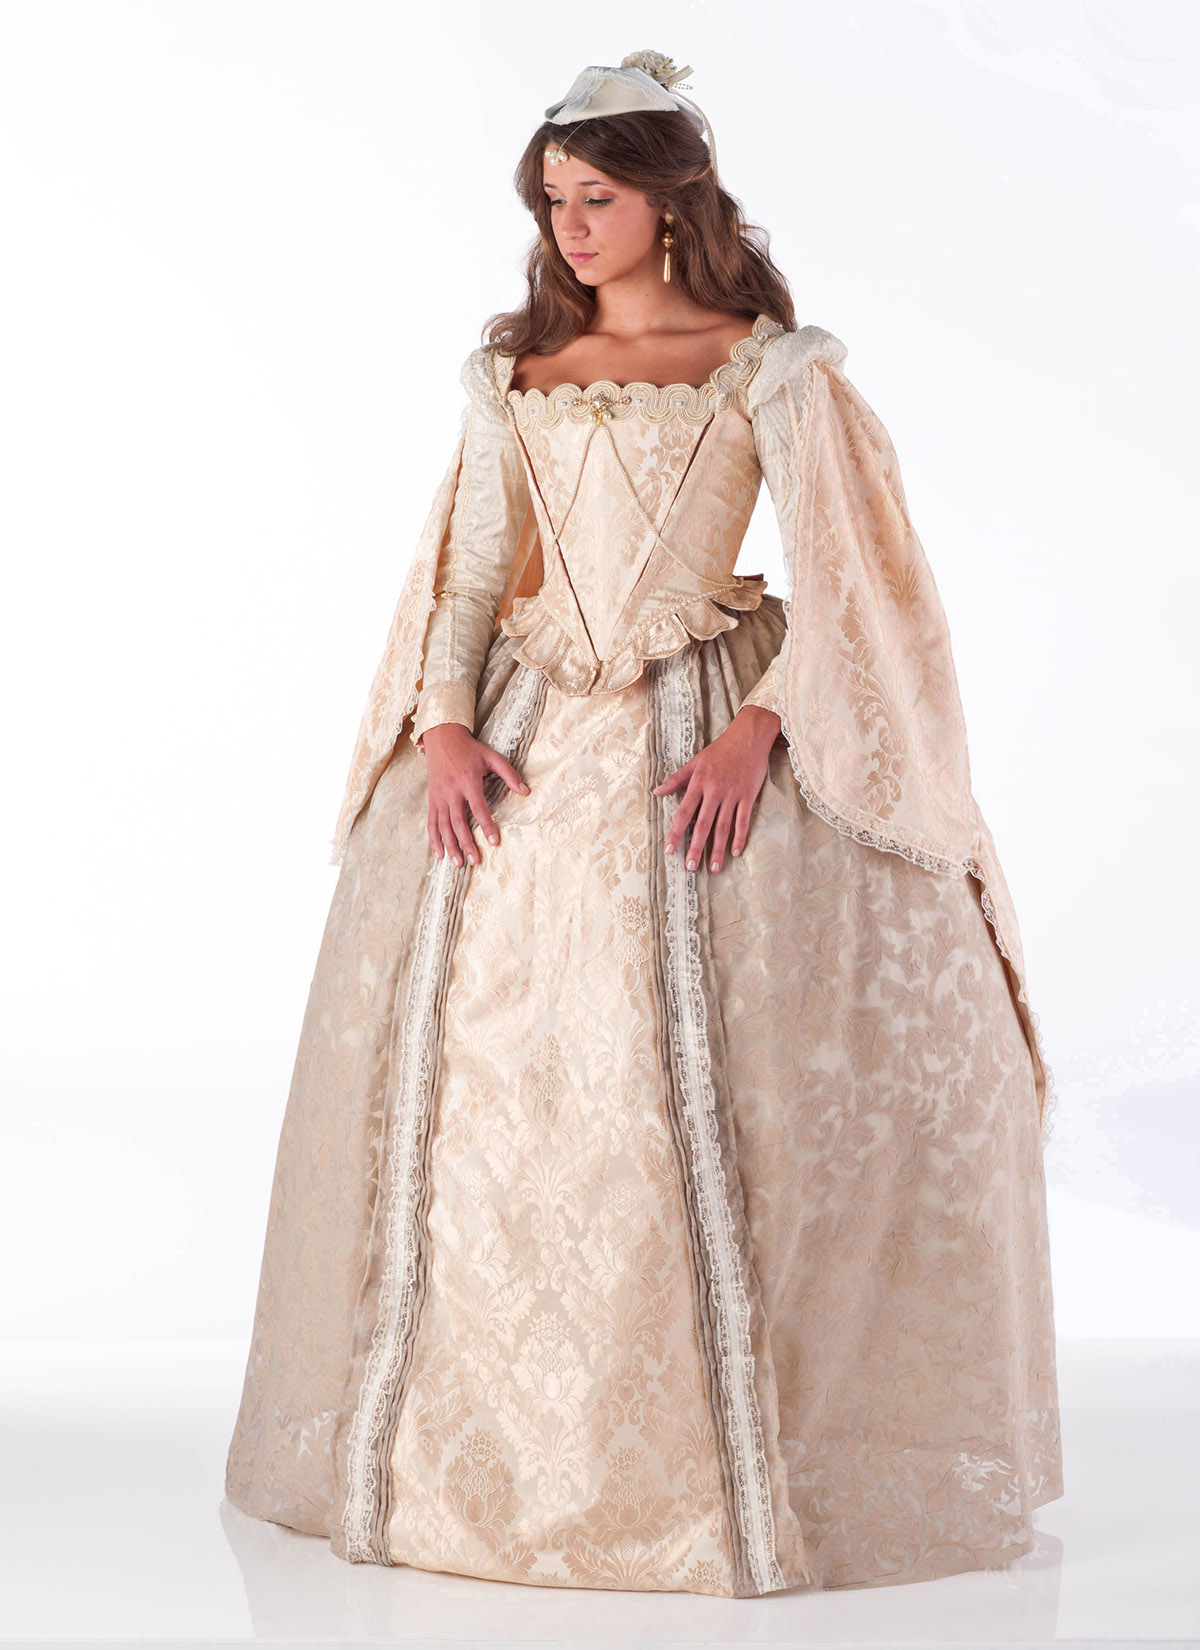 Renaissance elizabethan gown historical period wedding dress